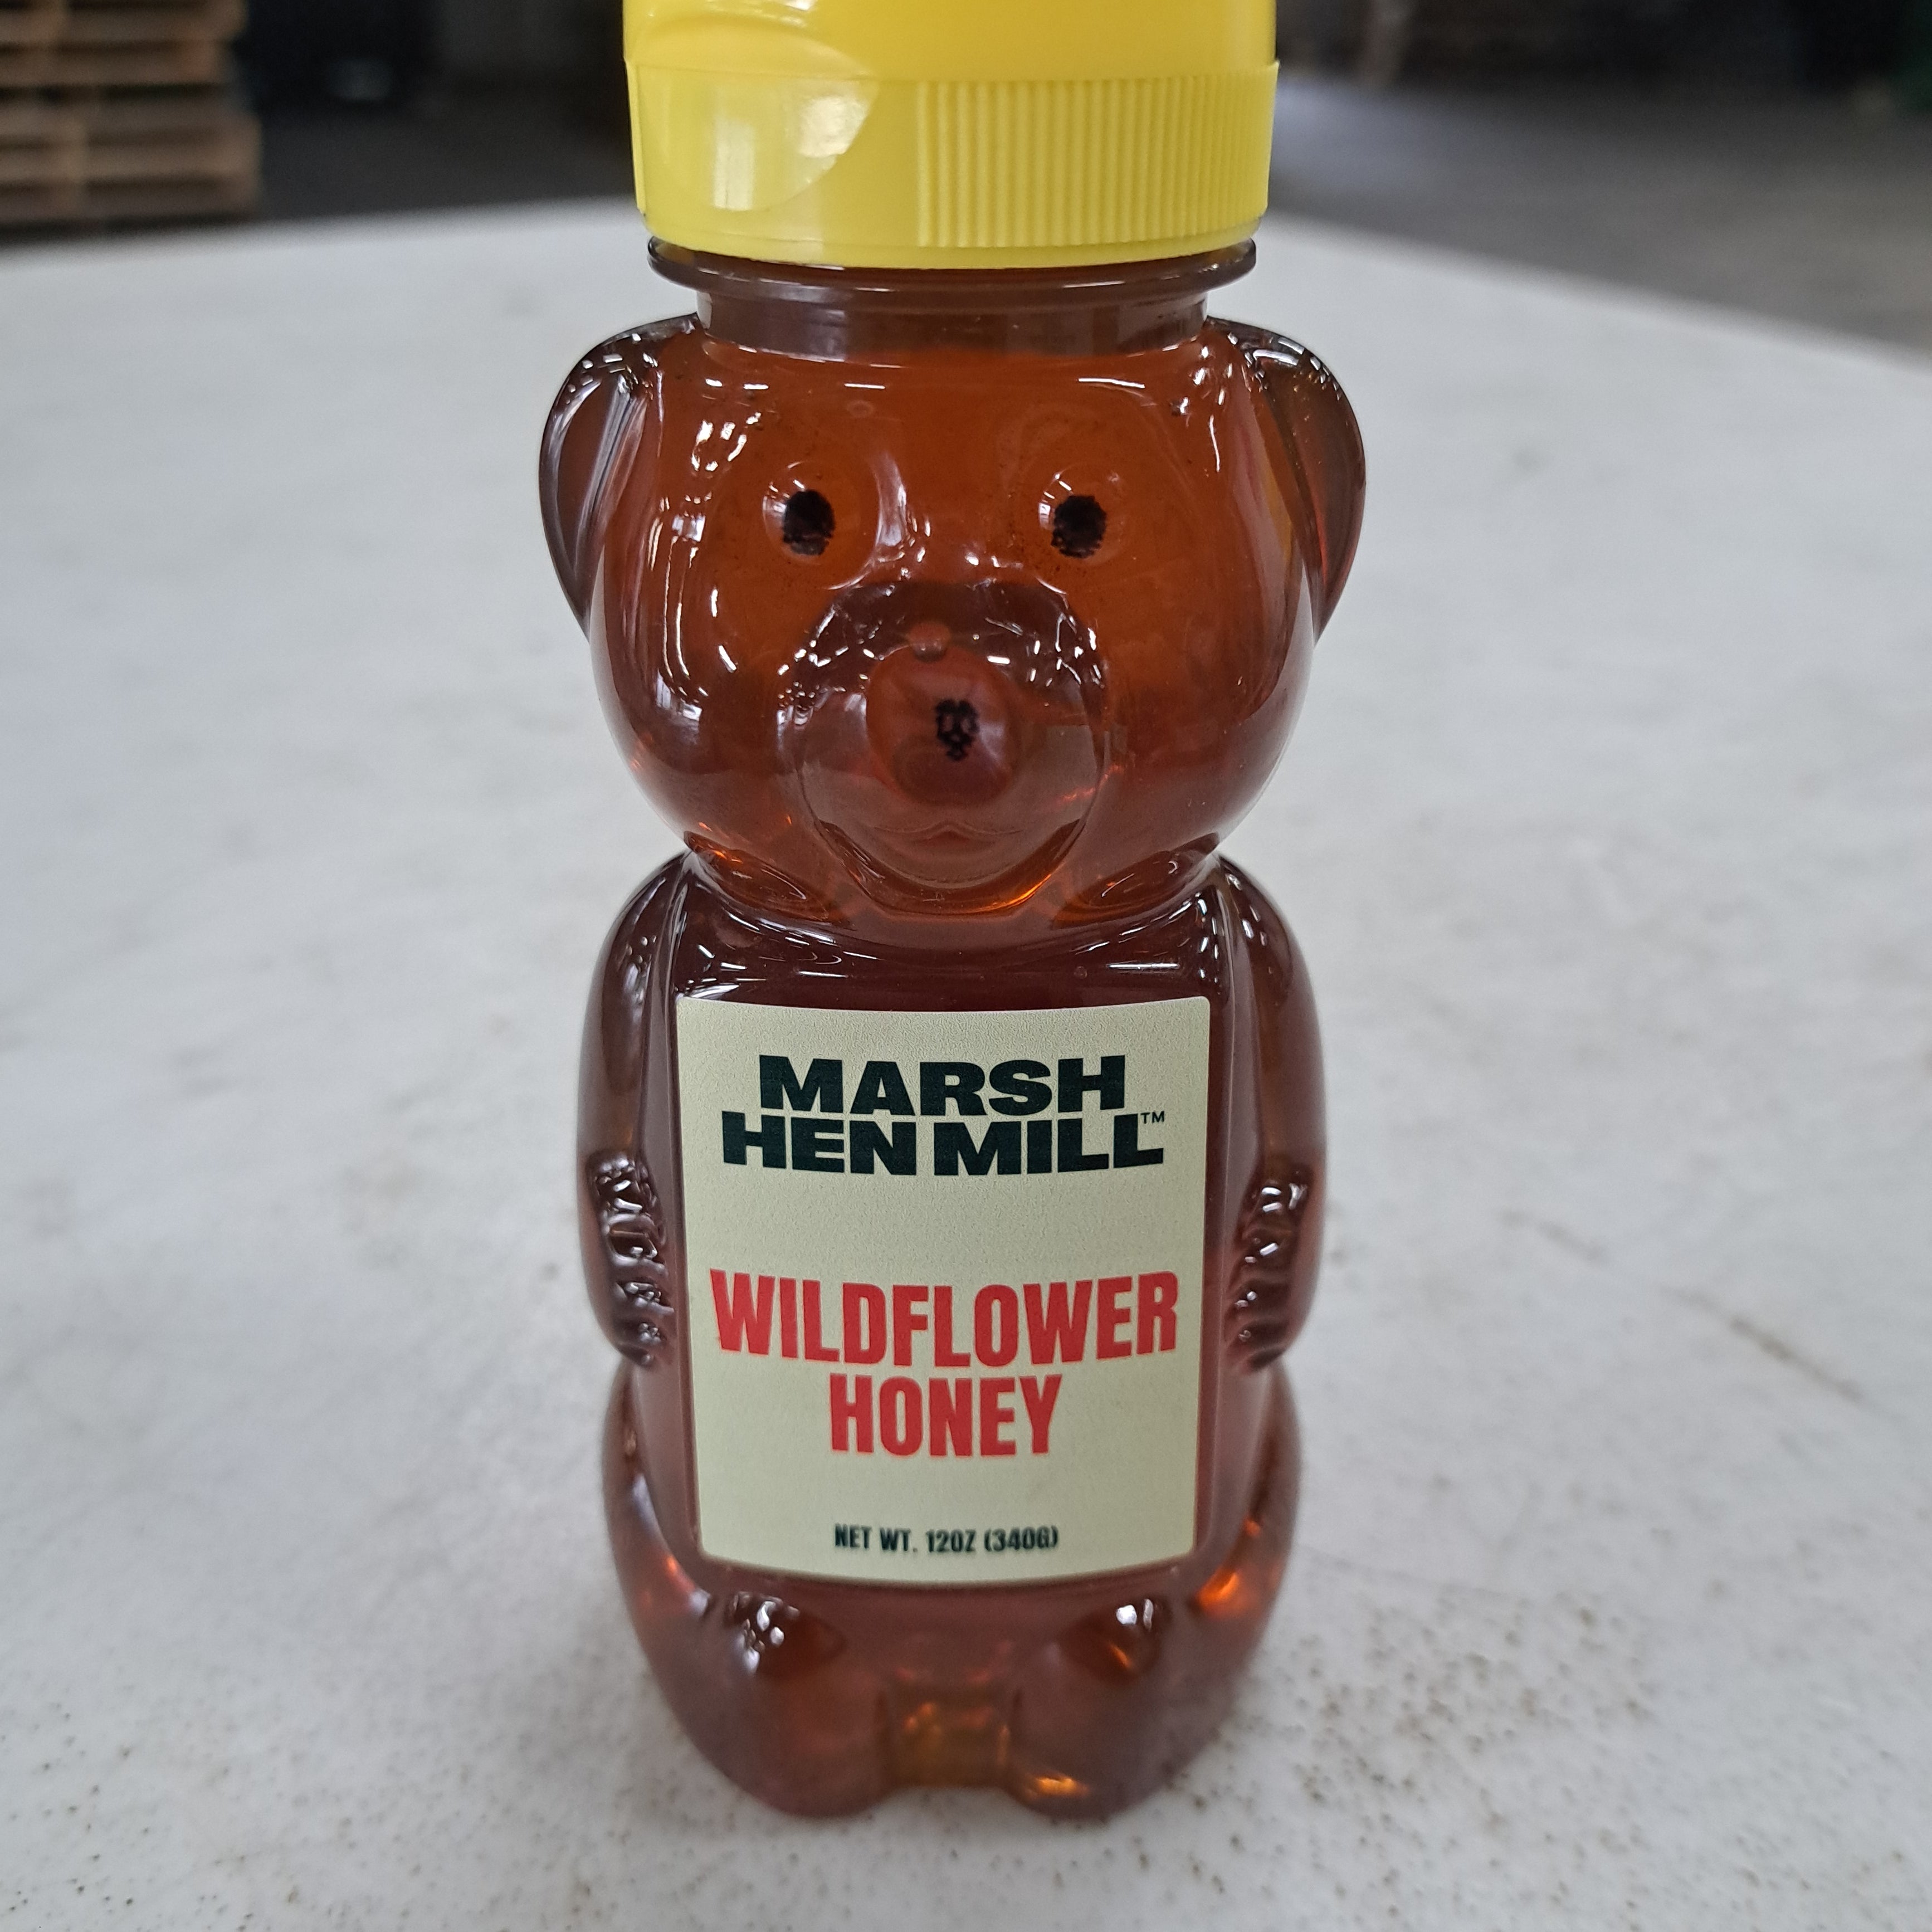 Wildflower Honey 12oz - Marsh Hen Mill